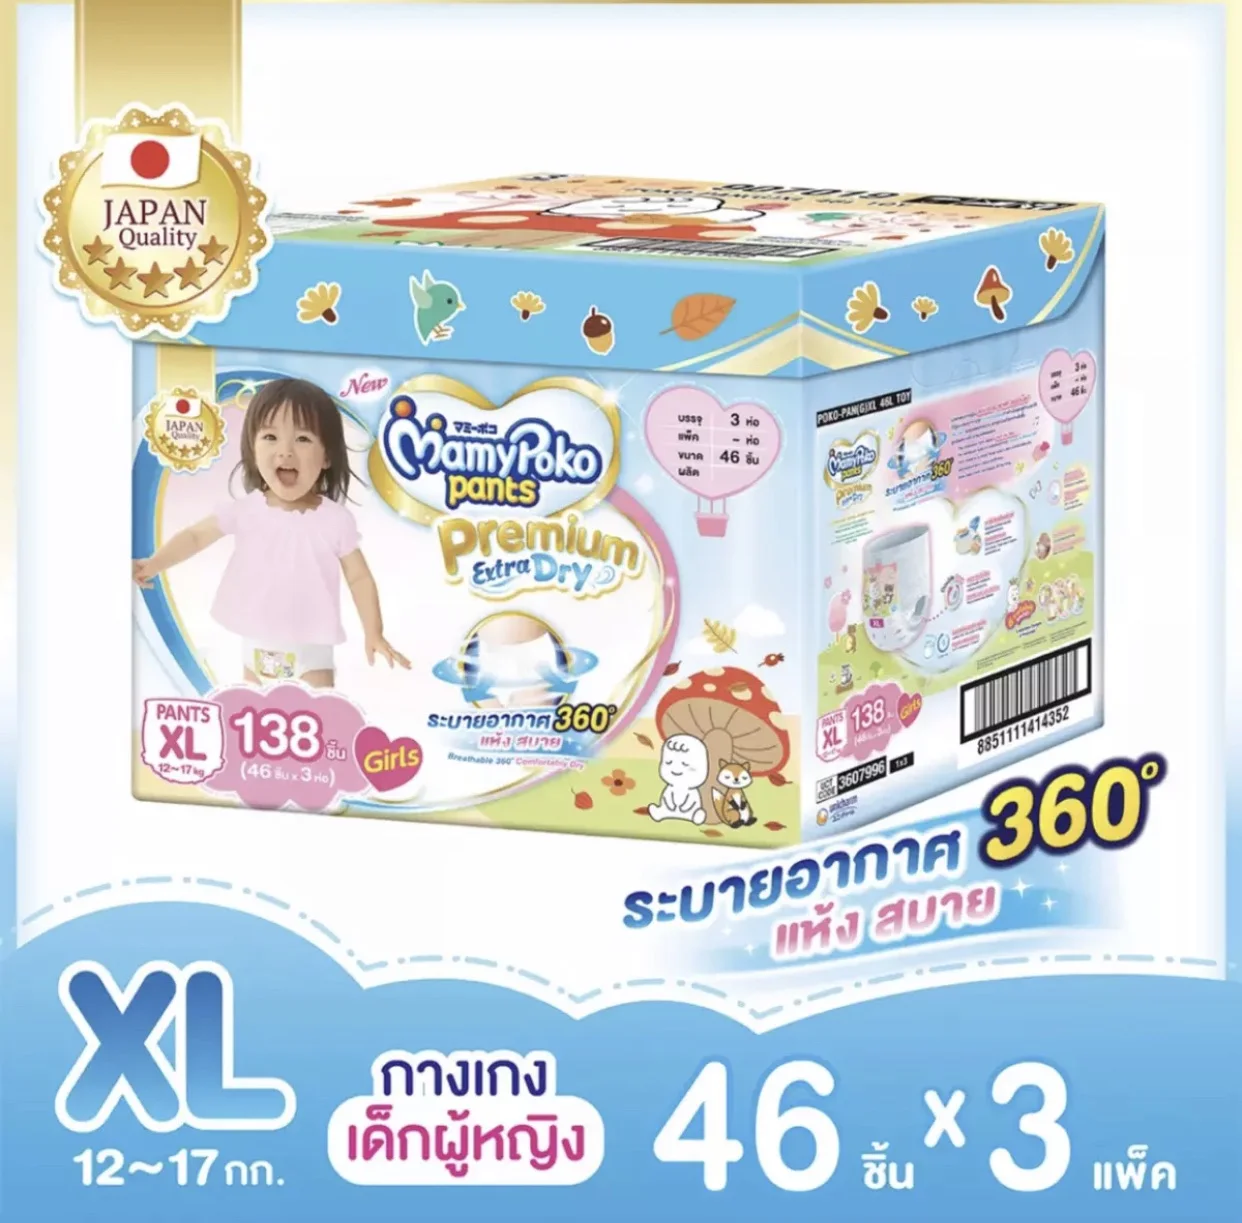 MamyPoko Pants Premium Extra Dry กล่อง Toy Box (Girl) ไซส์ XL 46 ชิ้น x 3 ห่อ